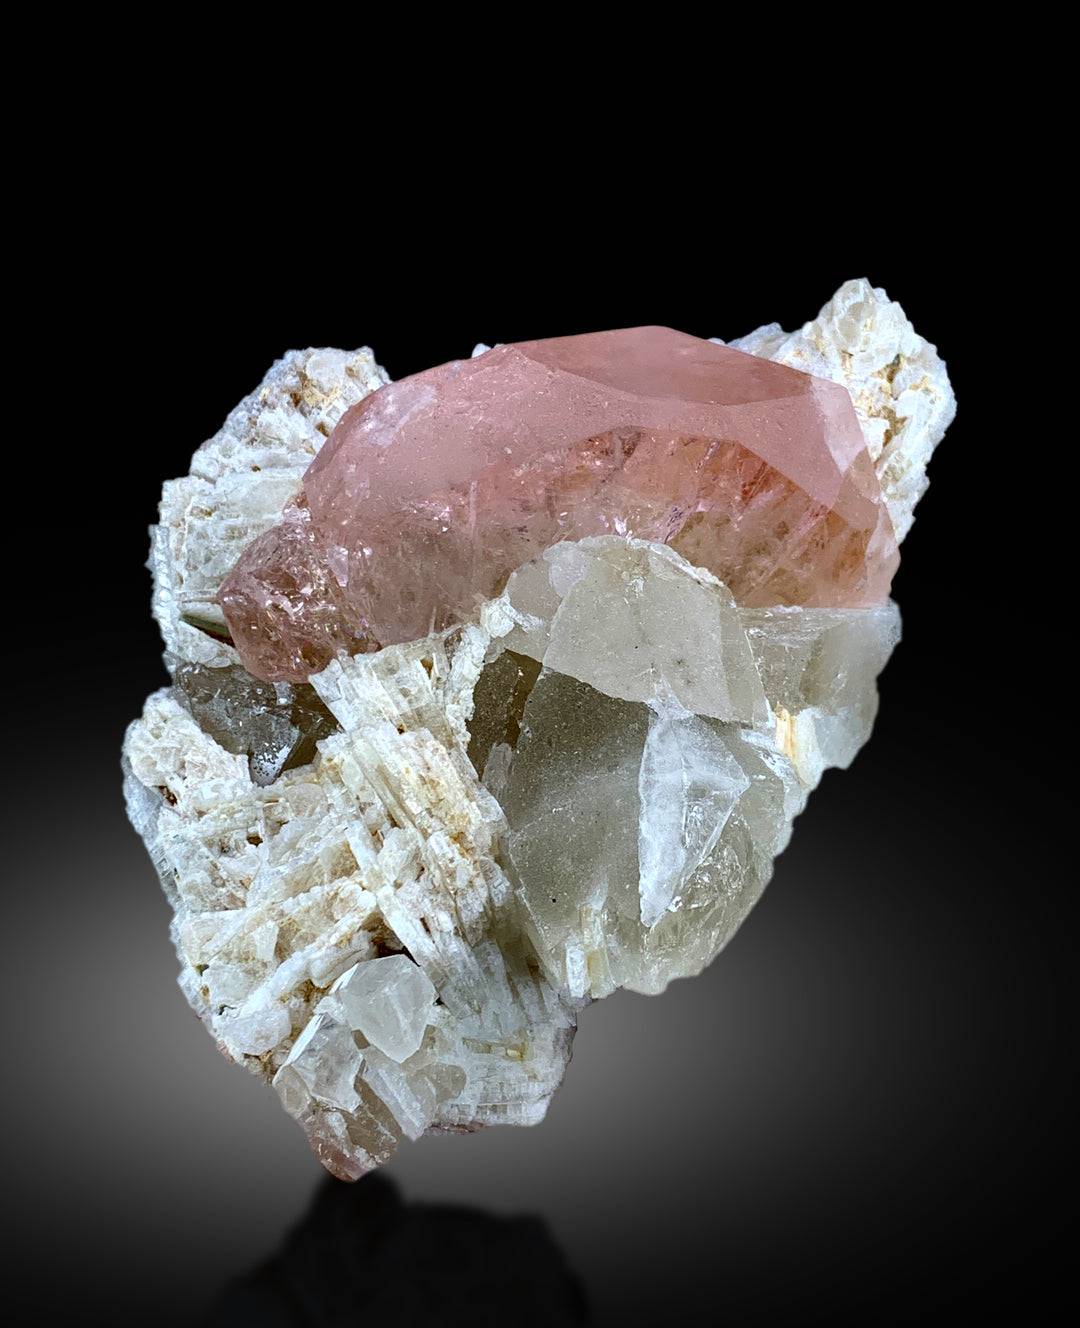 Exquisite Peach Pink Color Morganite with Quartz and Albite, Raw Mineral, Morganite Specimen from Dara-i-Pech Afghanistan - 424 gram